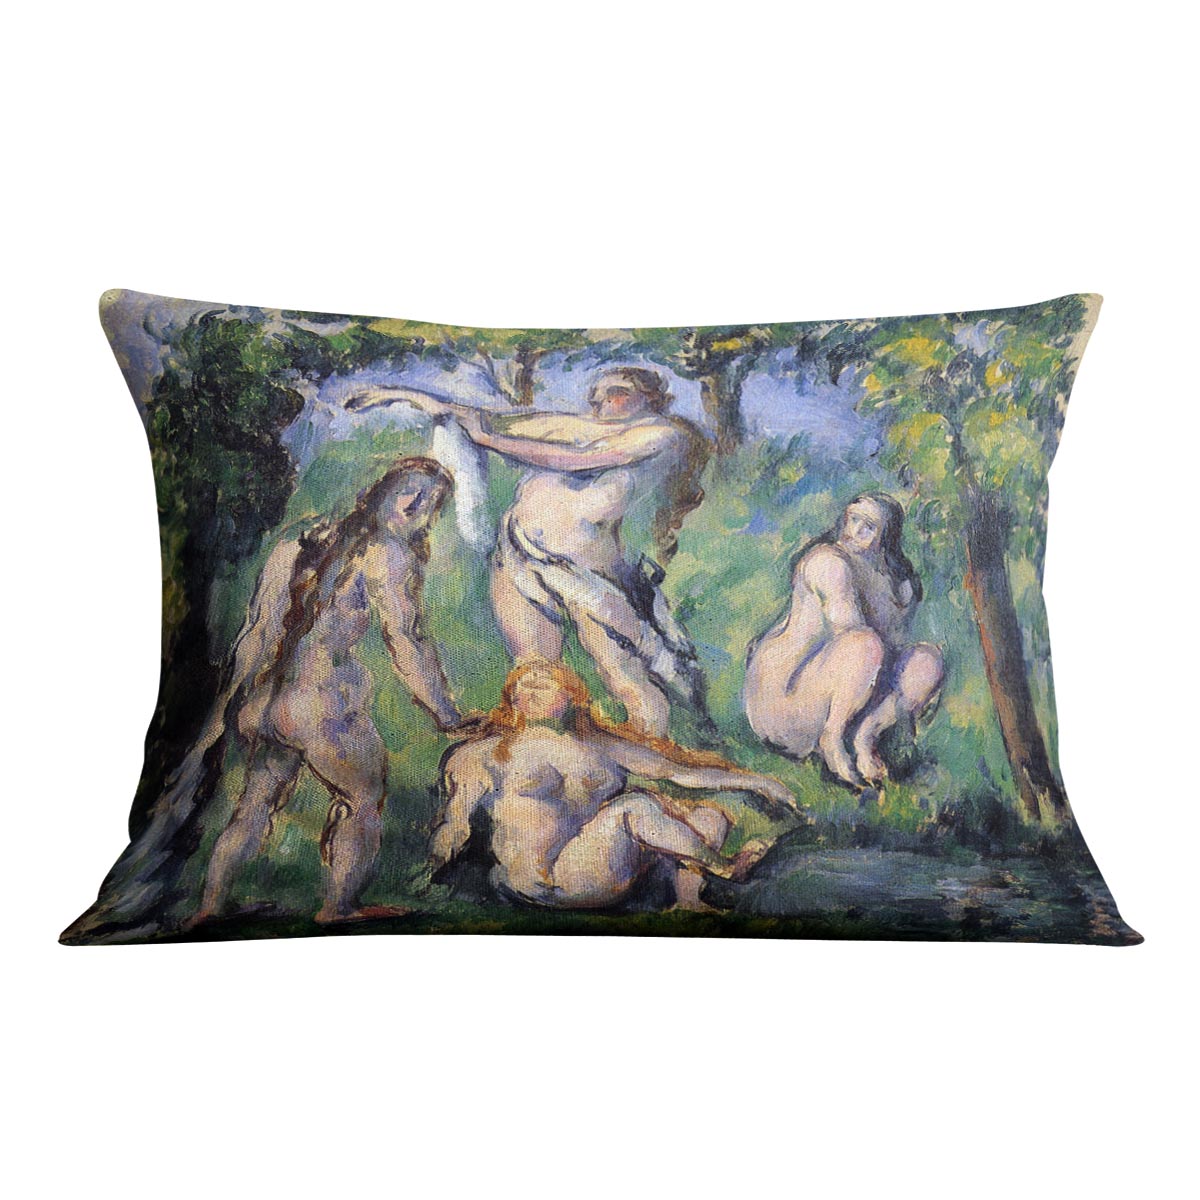 Bathers 2 by Cezanne Cushion